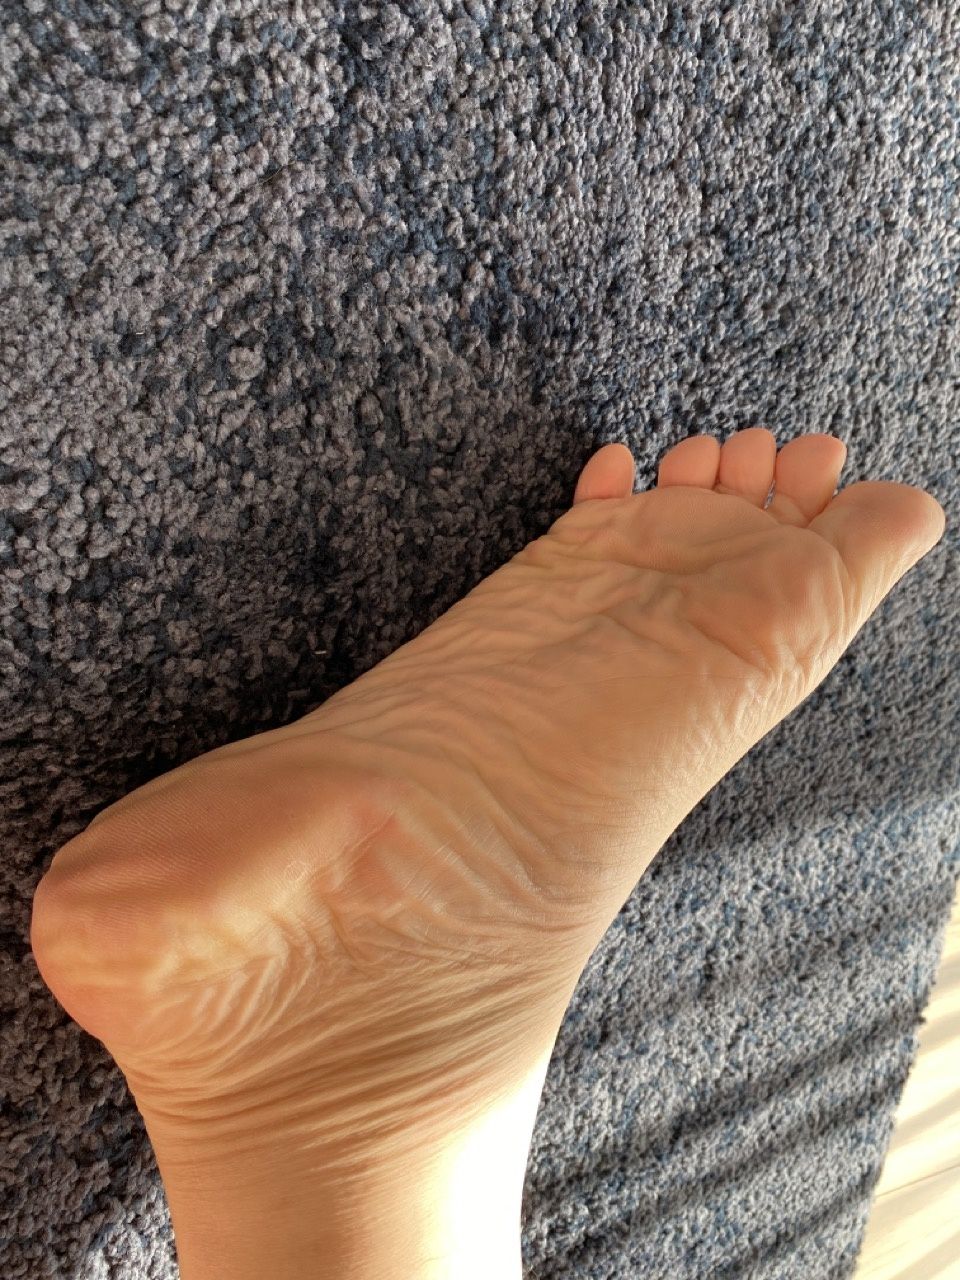 My beautiful male soles